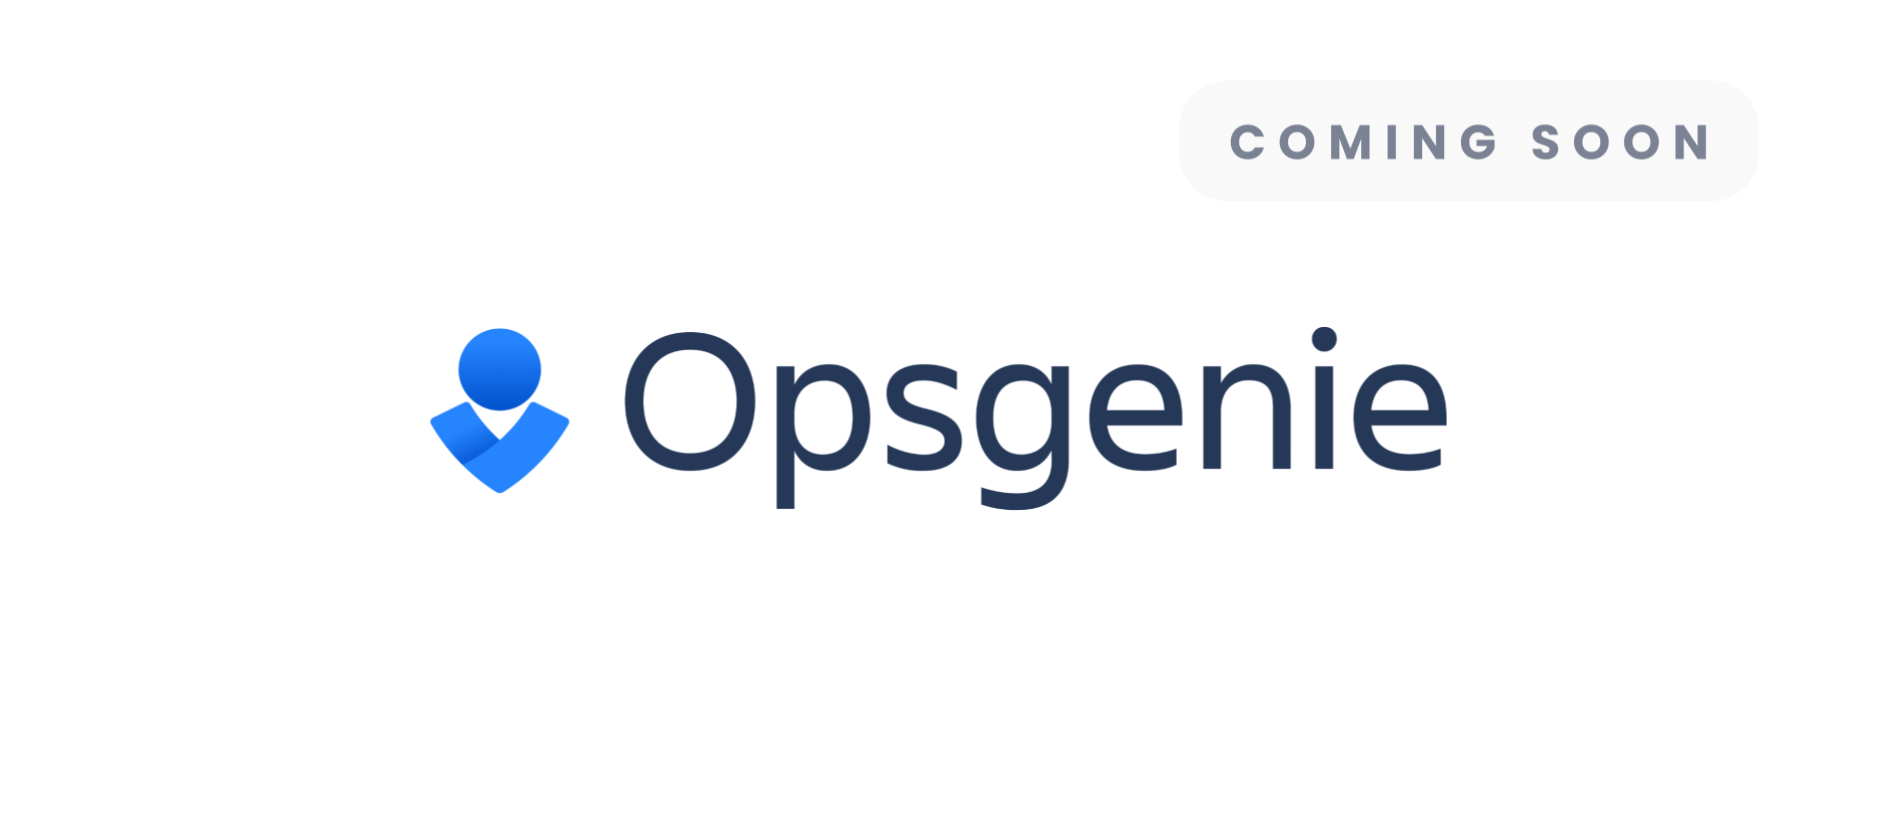 Communication - Opsgenie - Coming soon